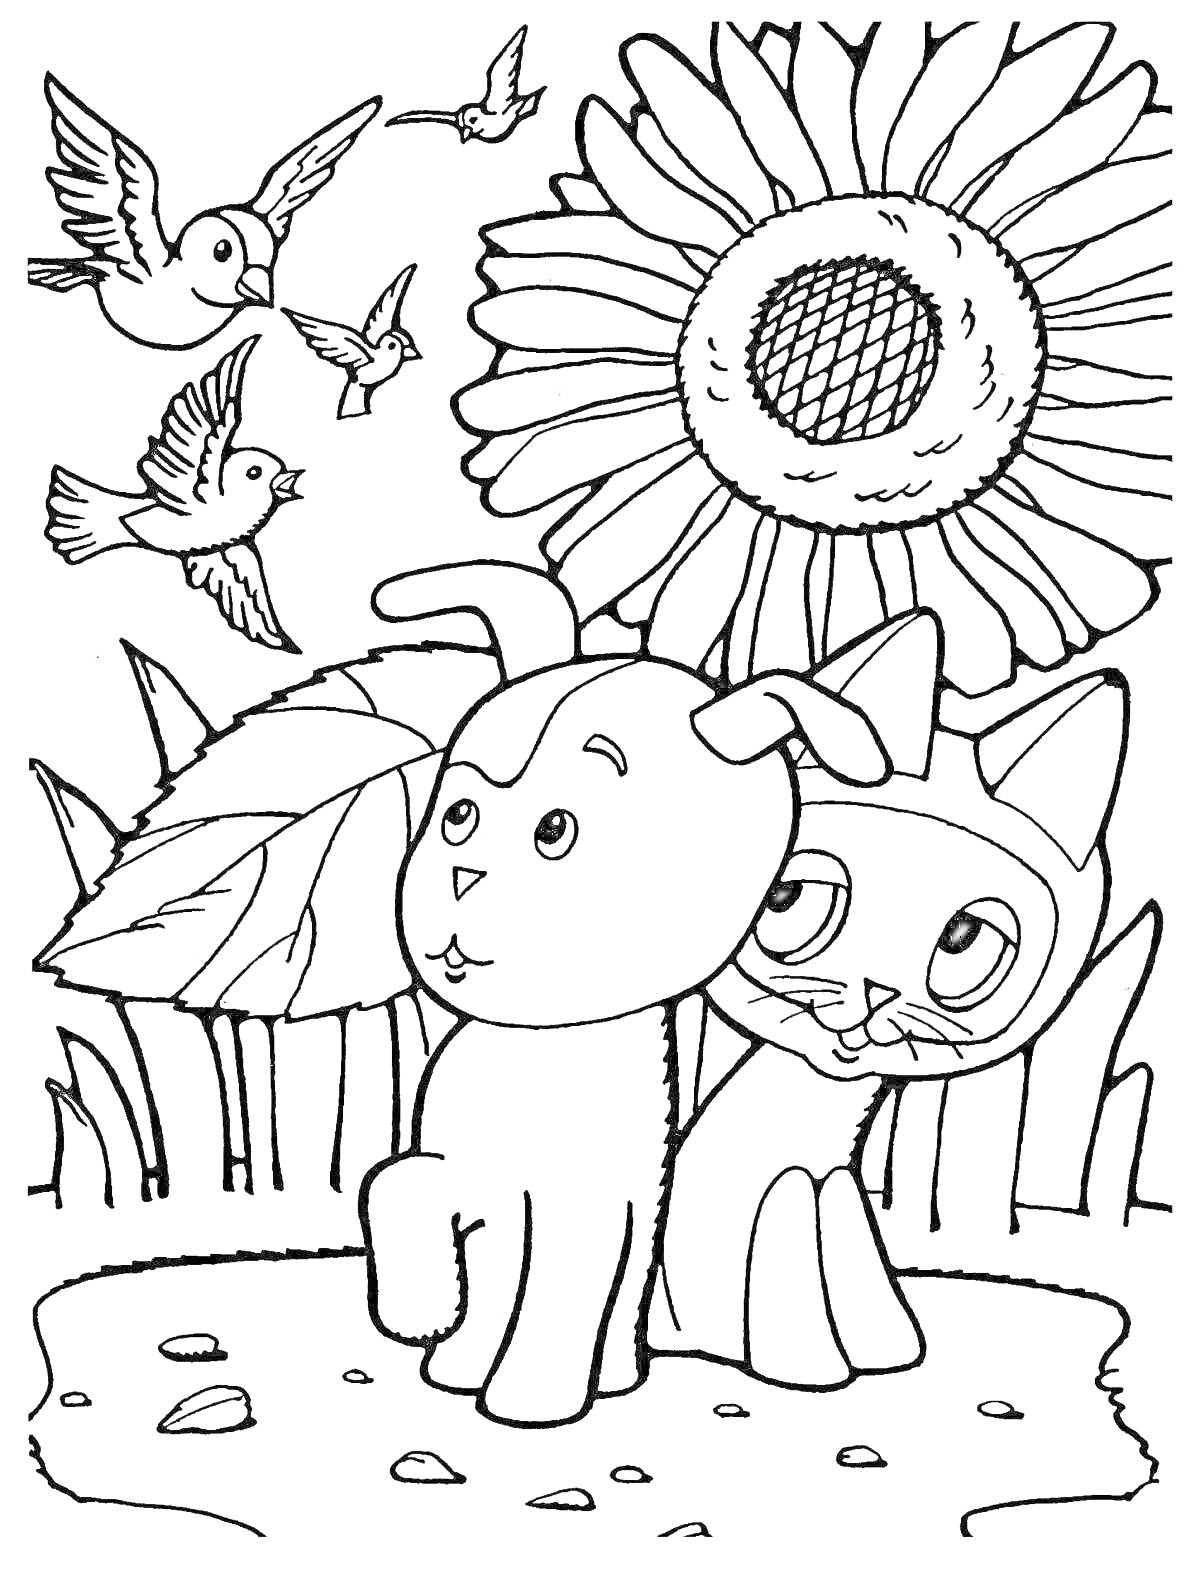 Раскраска Дружба котенка и щенка под подсолнухом с птицами